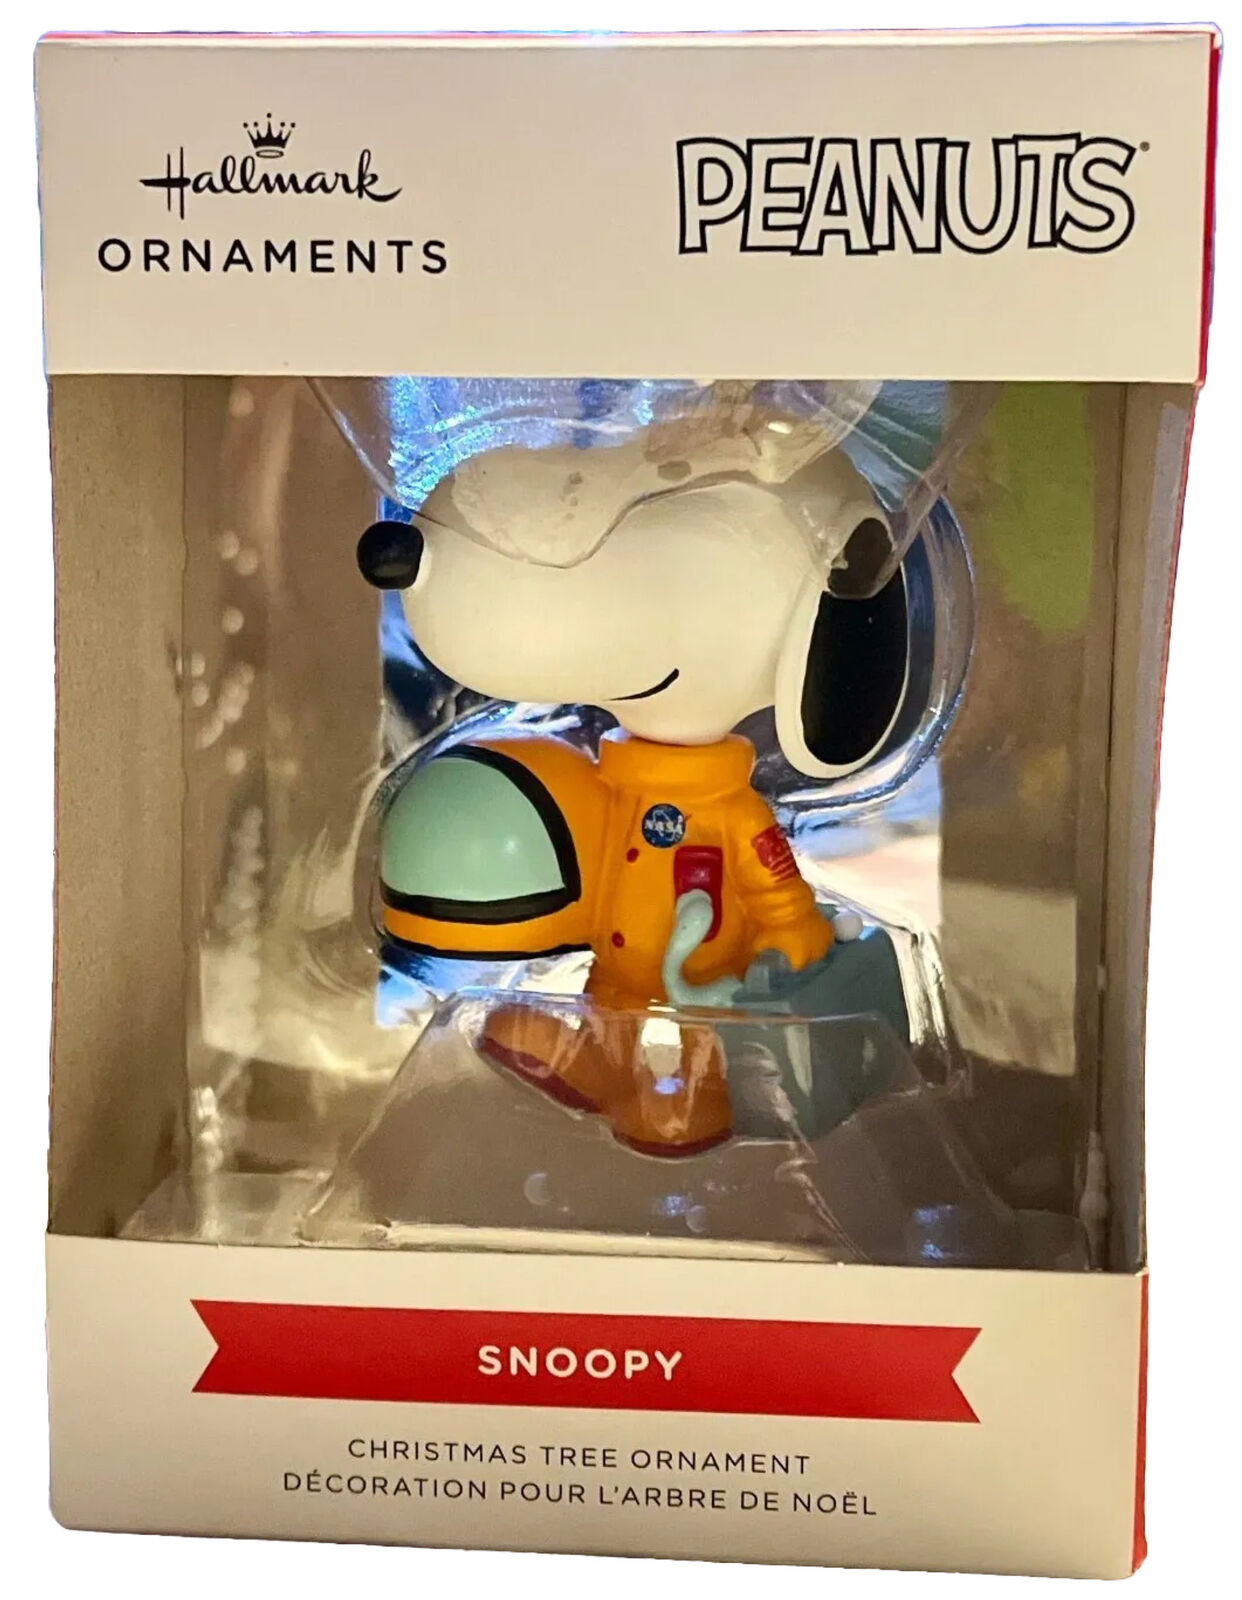 Limited Edition Snoopy Astronaut Christmas Ornament by Hallmark via Macy’s